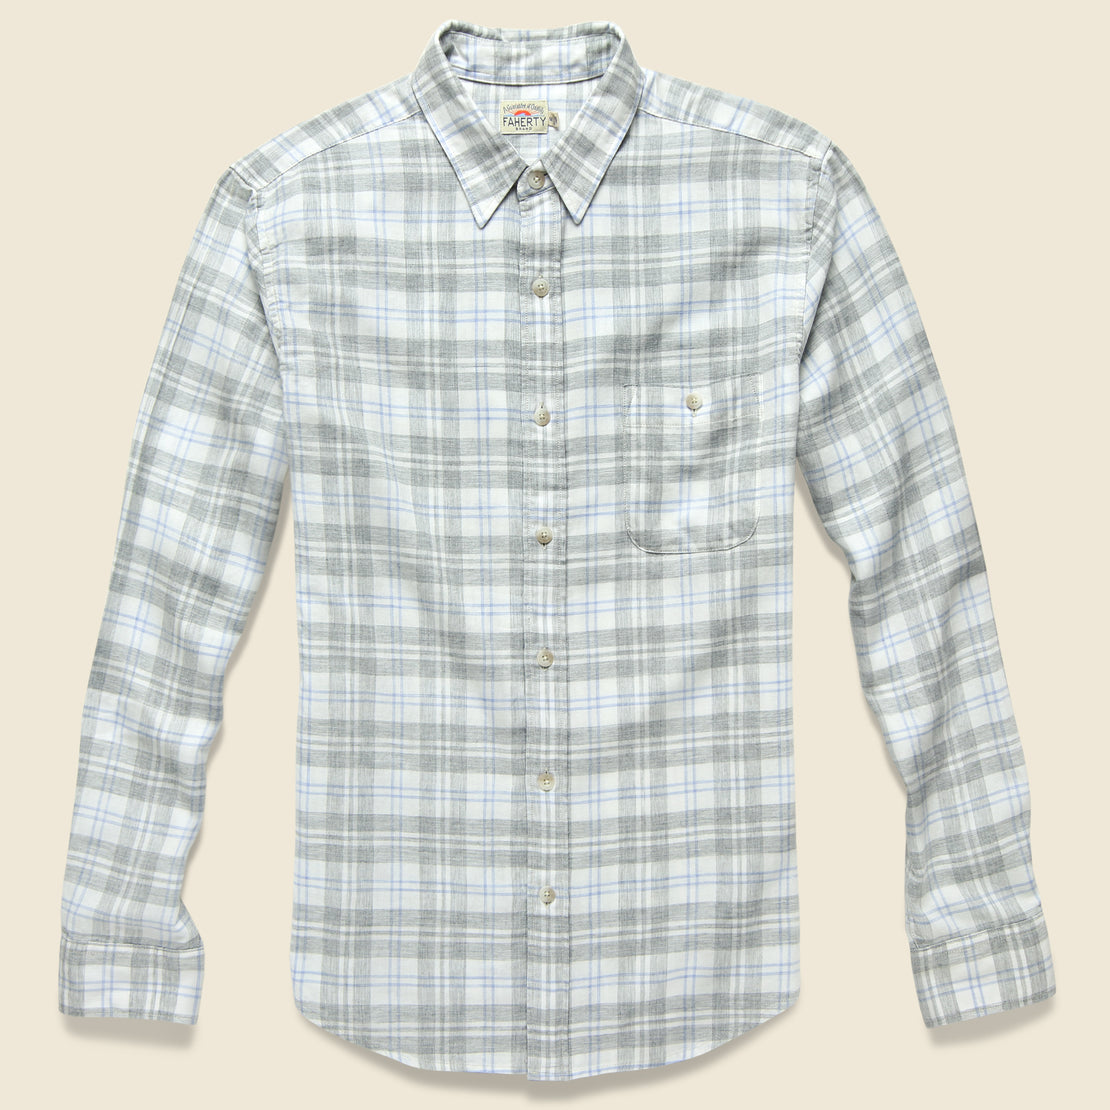 Faherty Signature Washed Twill Shirt - Grey/Cream